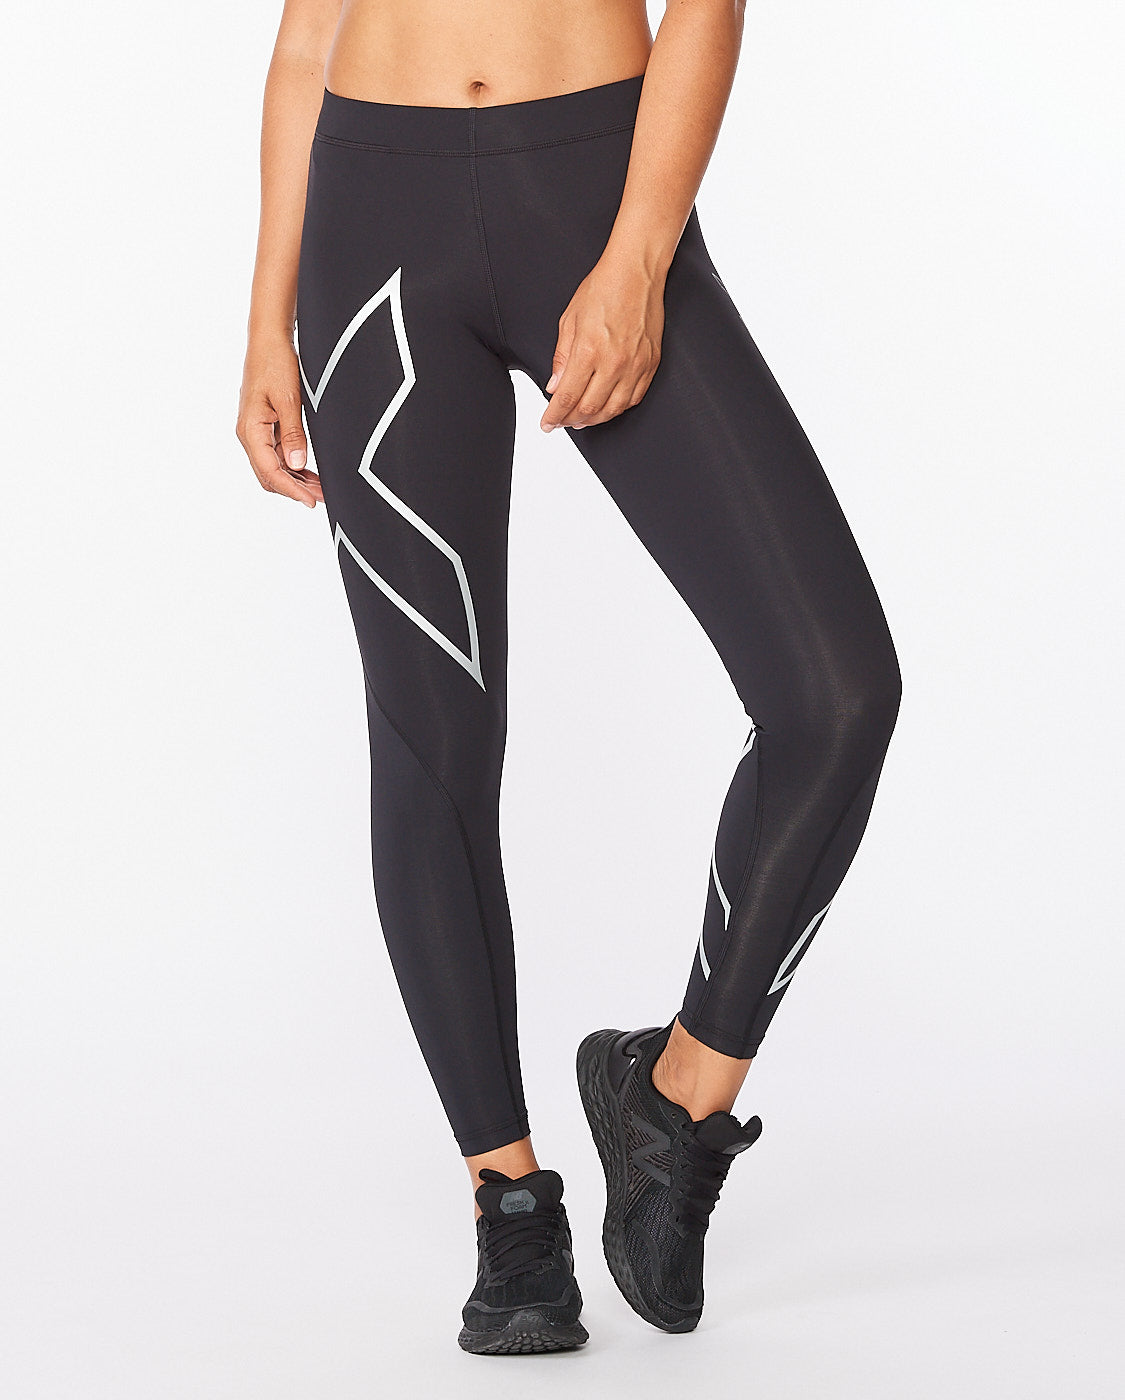 2XU Pants Leggings Womens Small Black Activewear Running Sports Compression